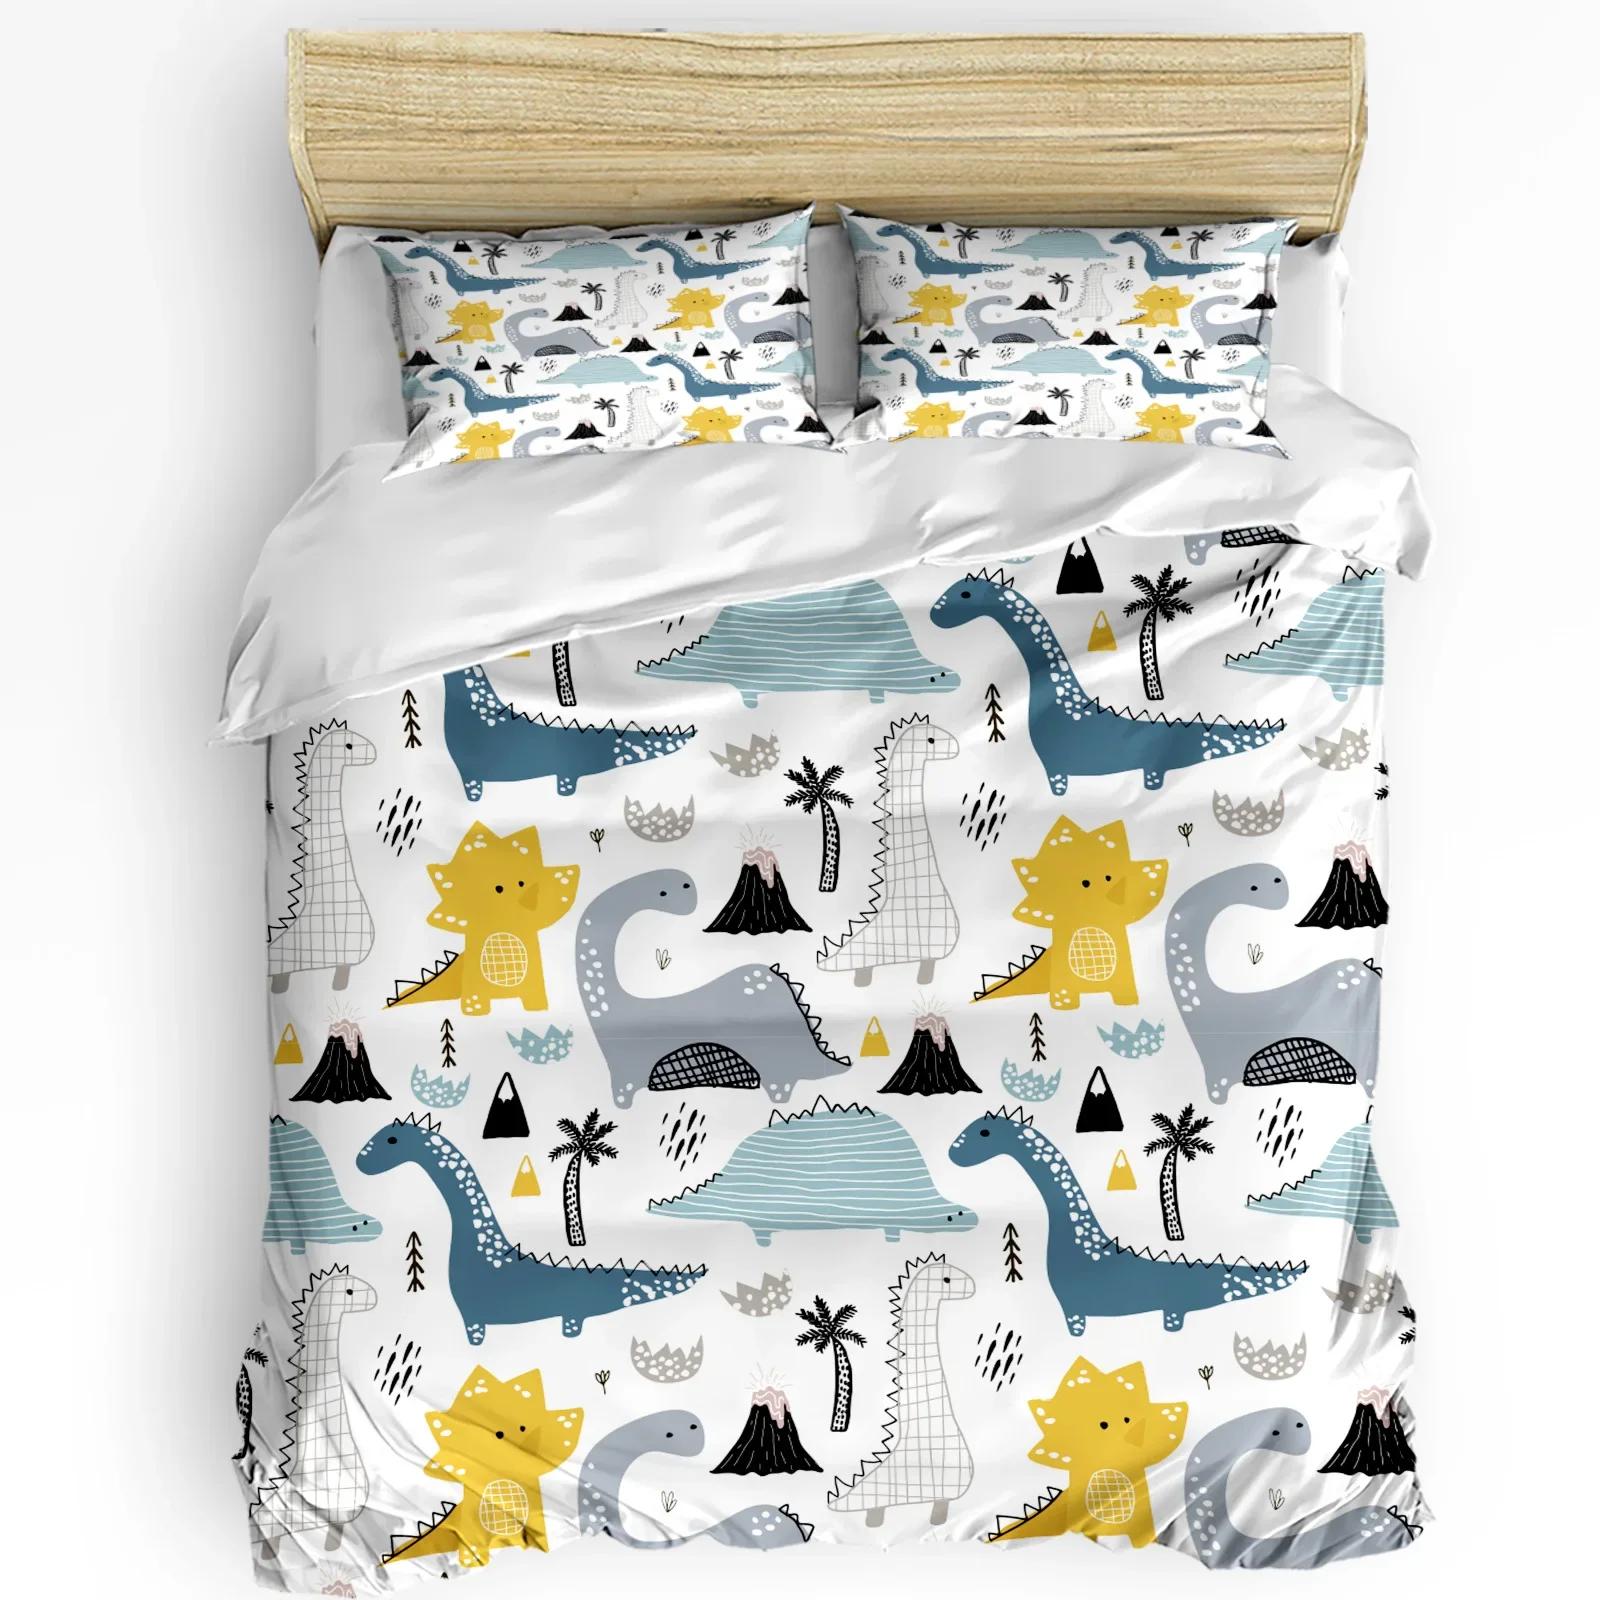 3pcs Bedding Set Cute Cartoon Dinosaur Kawaii Home Textile Duvet Cover Pillow Case Boy Kid Teen Girl Bedding Covers